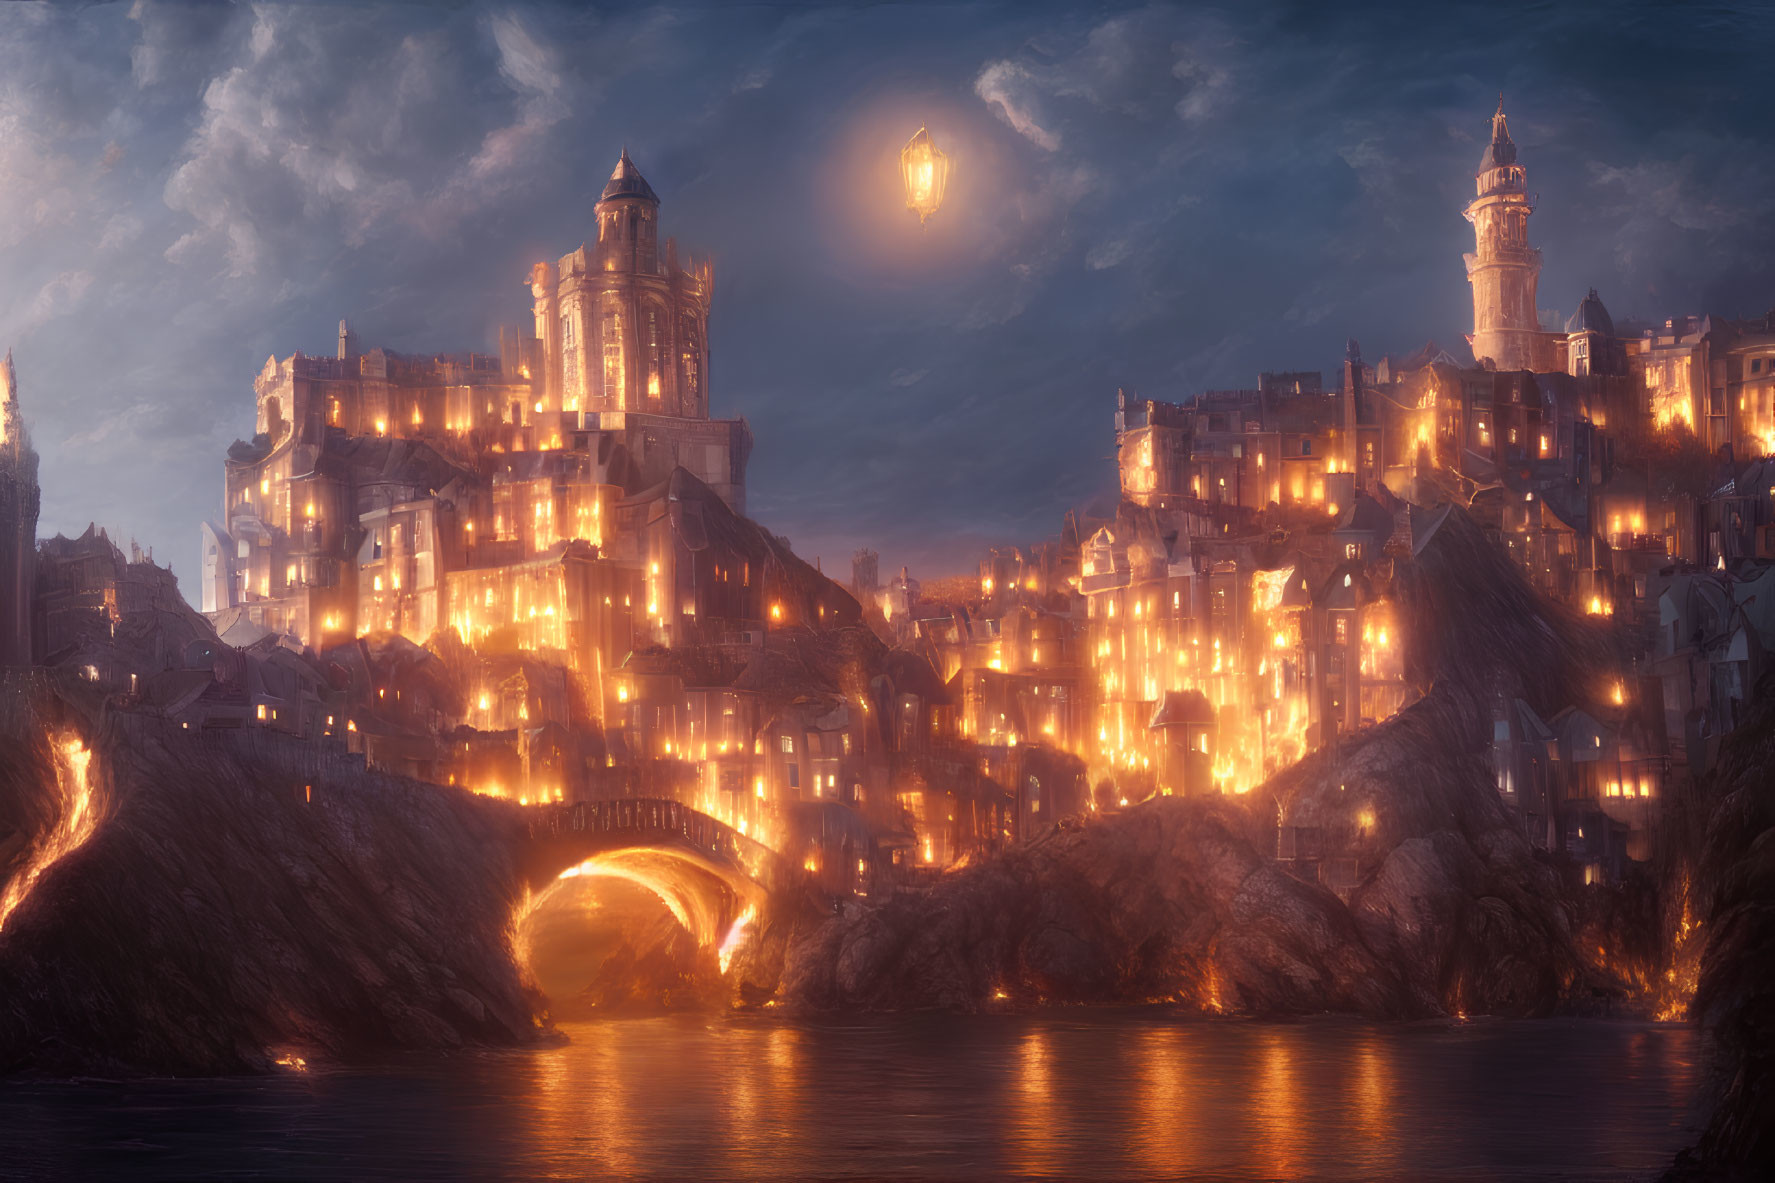 Twilight fantasy coastal city with illuminated buildings and arched bridge